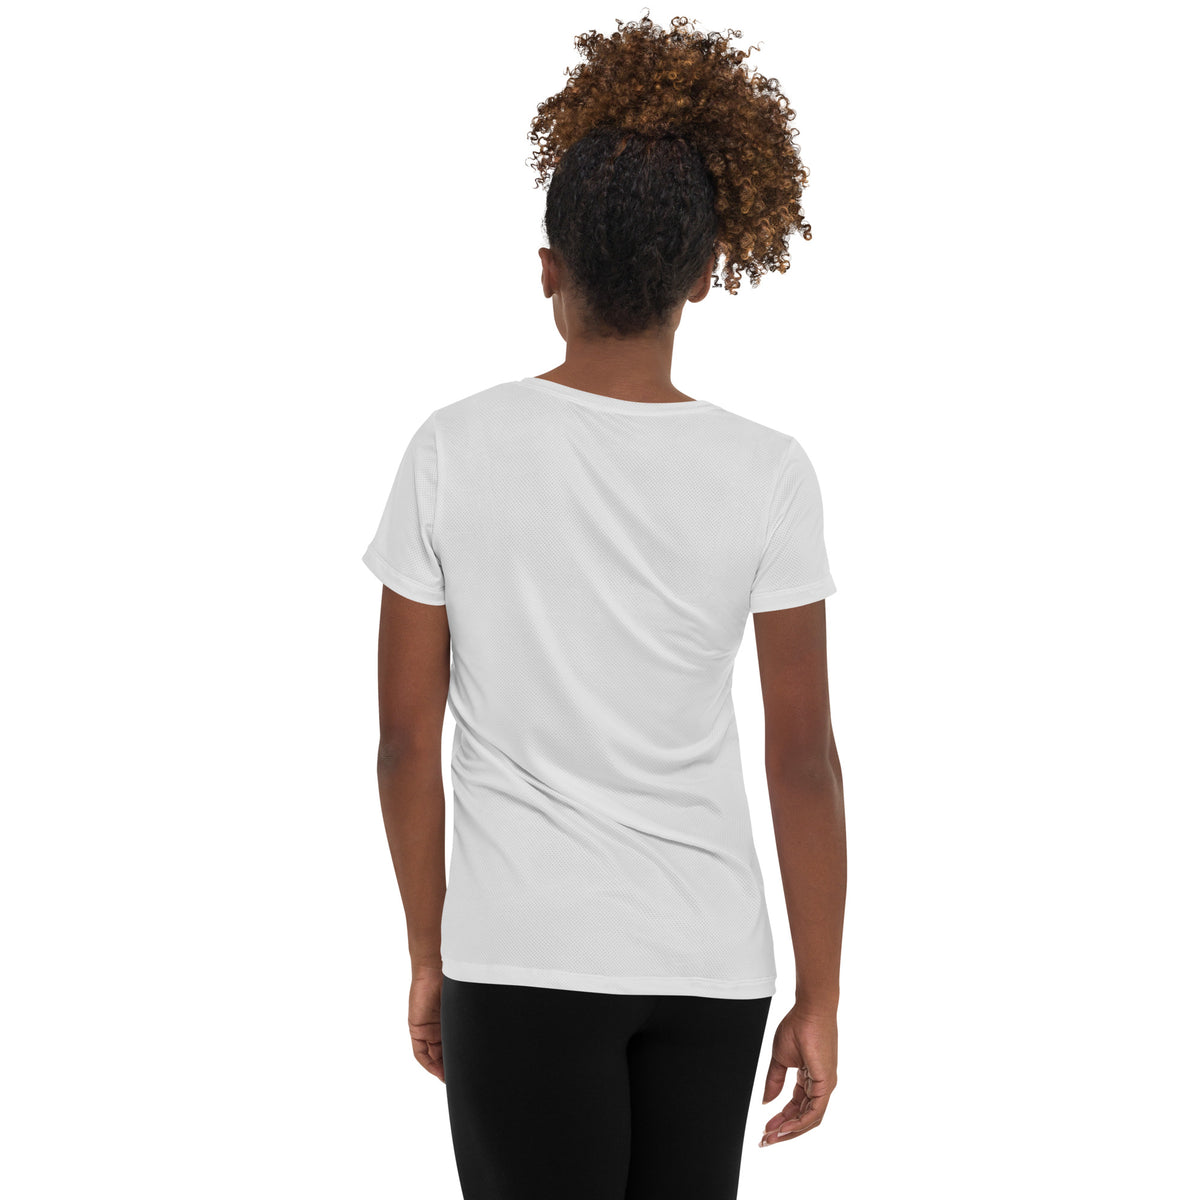 Black Women's Athletic T-shirt   Queen Nefertiti Edition Sumbu_African_Prints_and_Designs